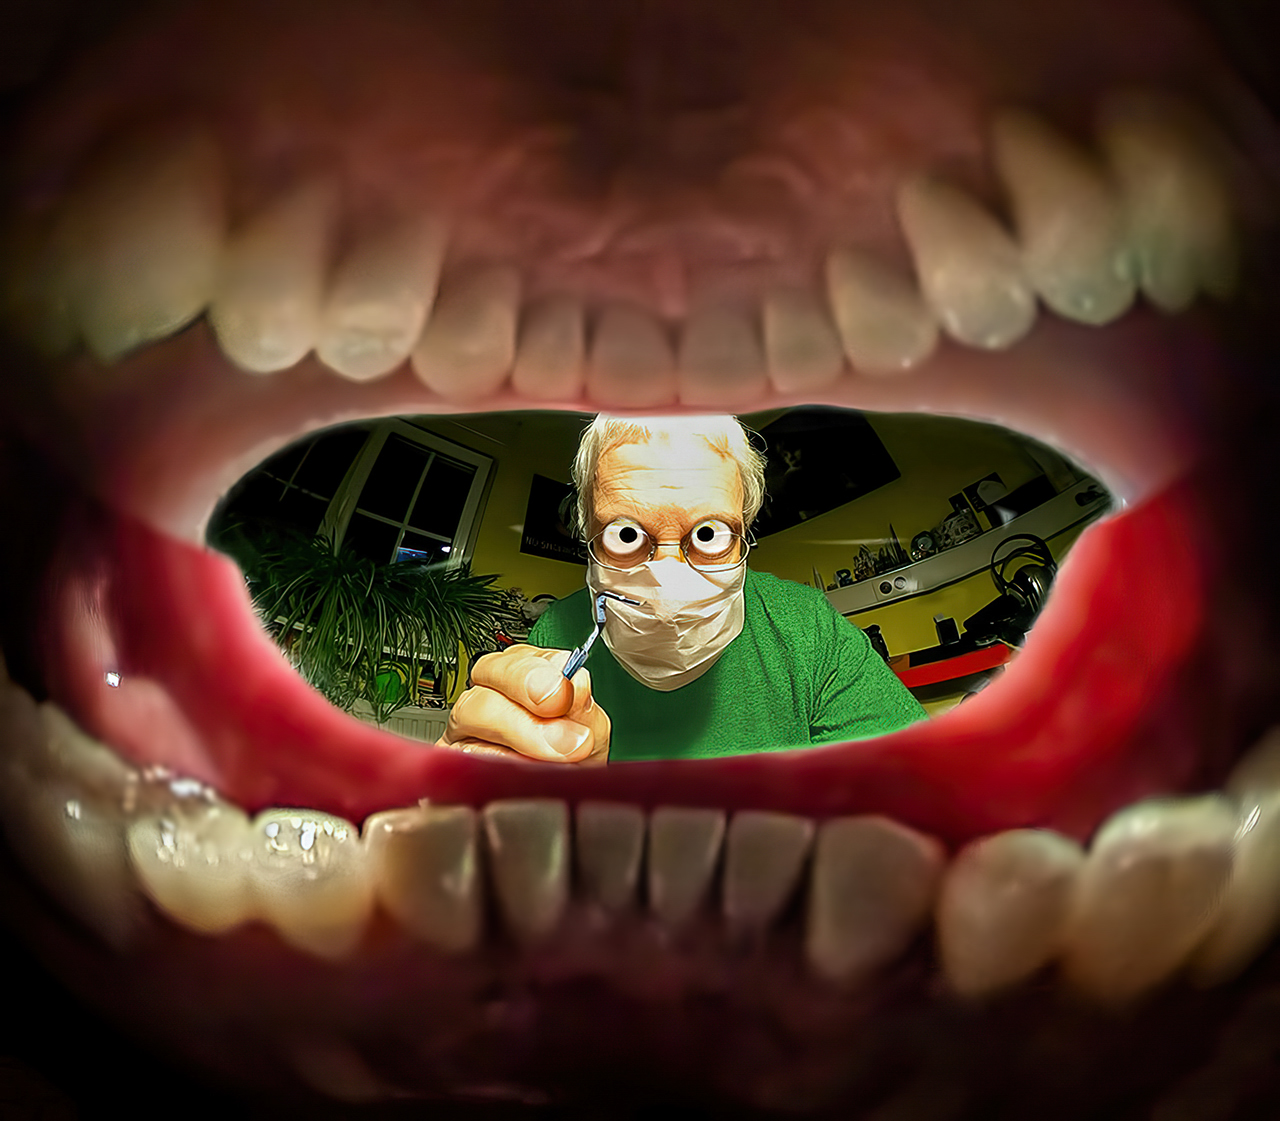 I am the dentist!